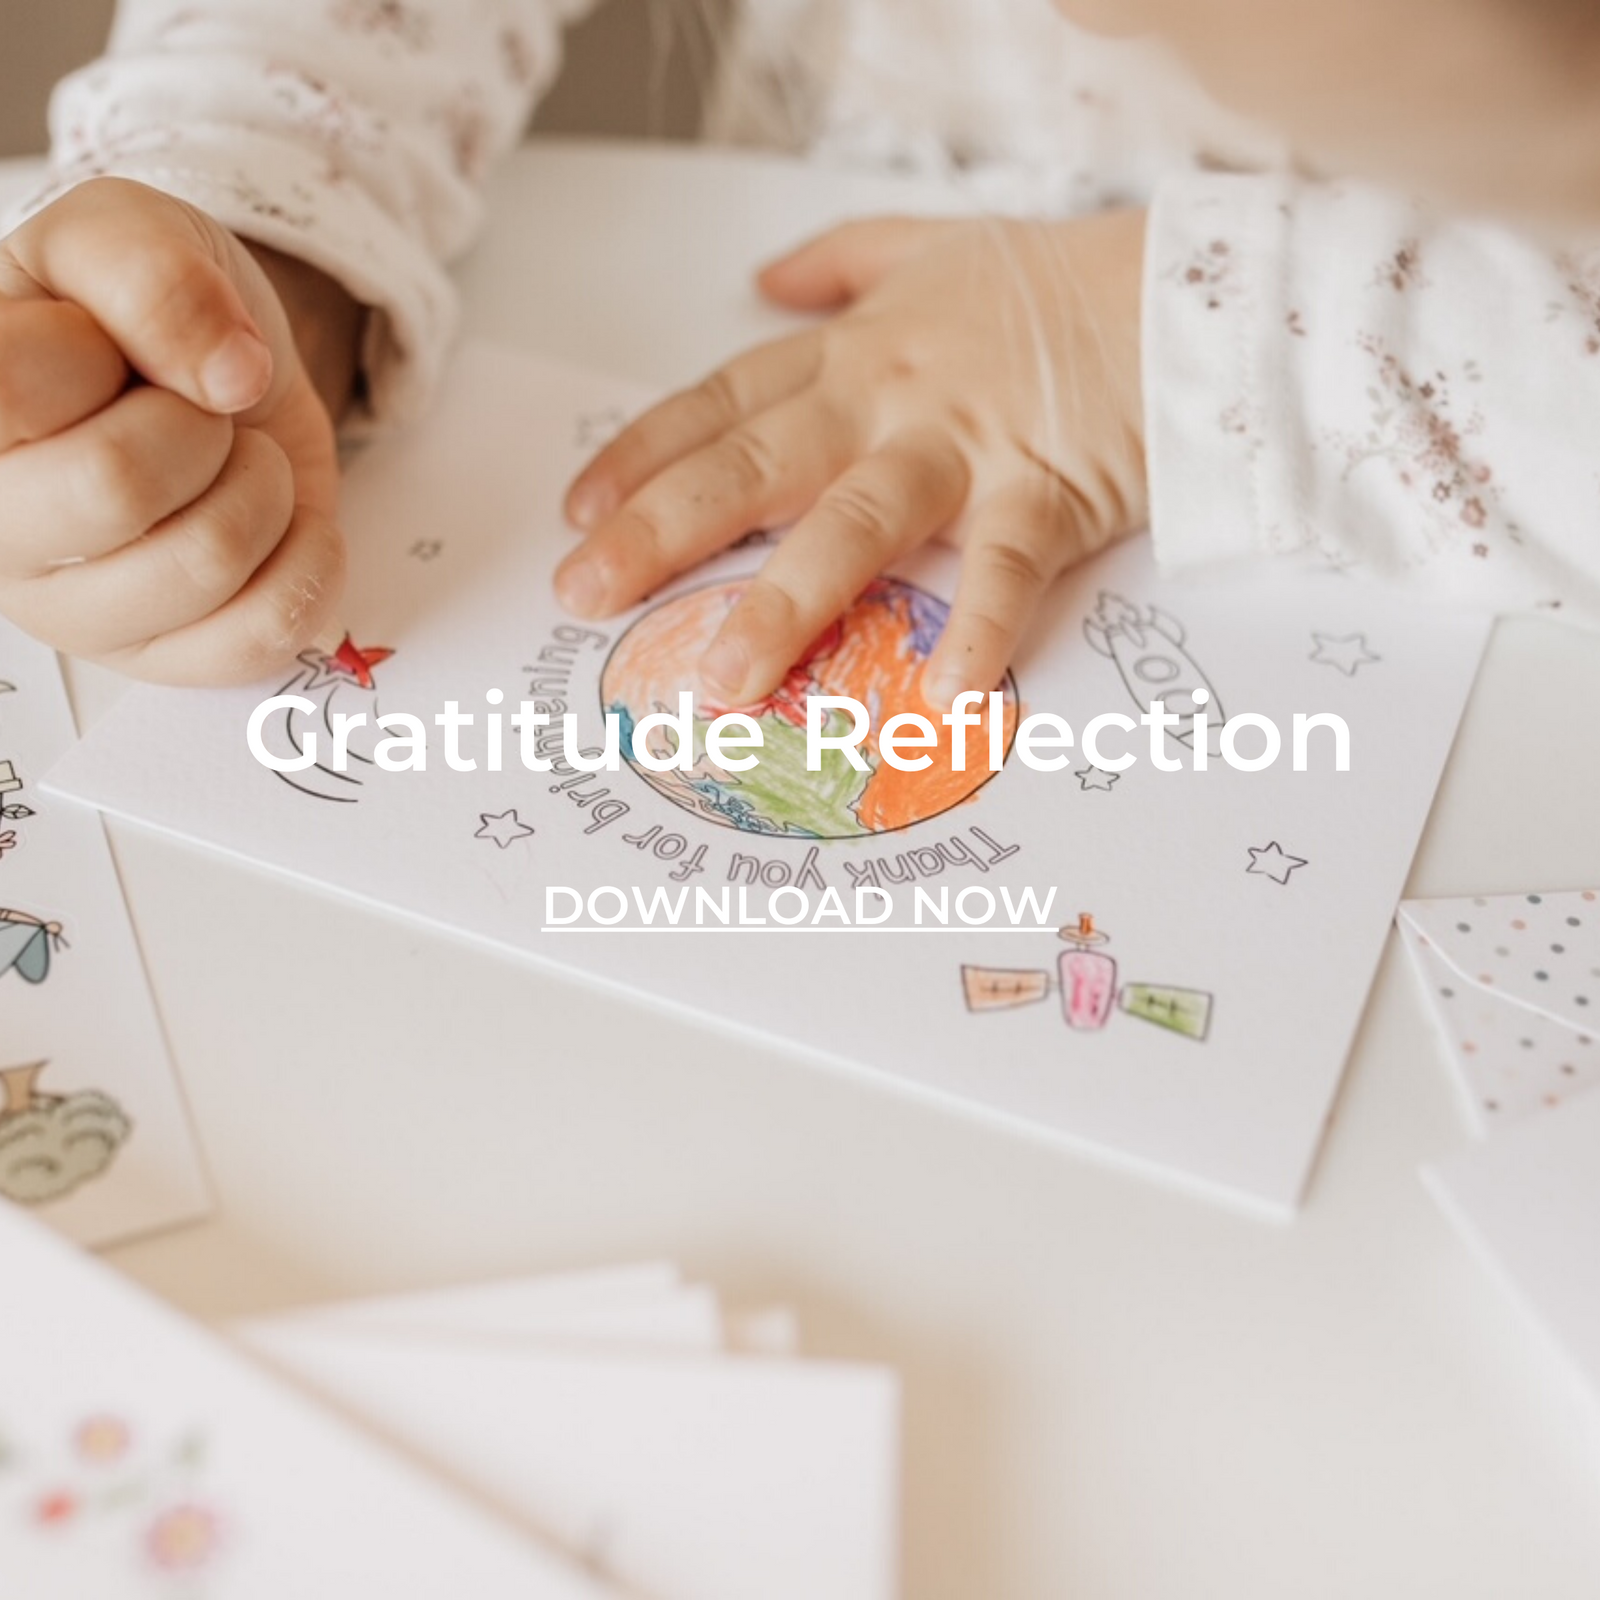 Gratitude Reflection